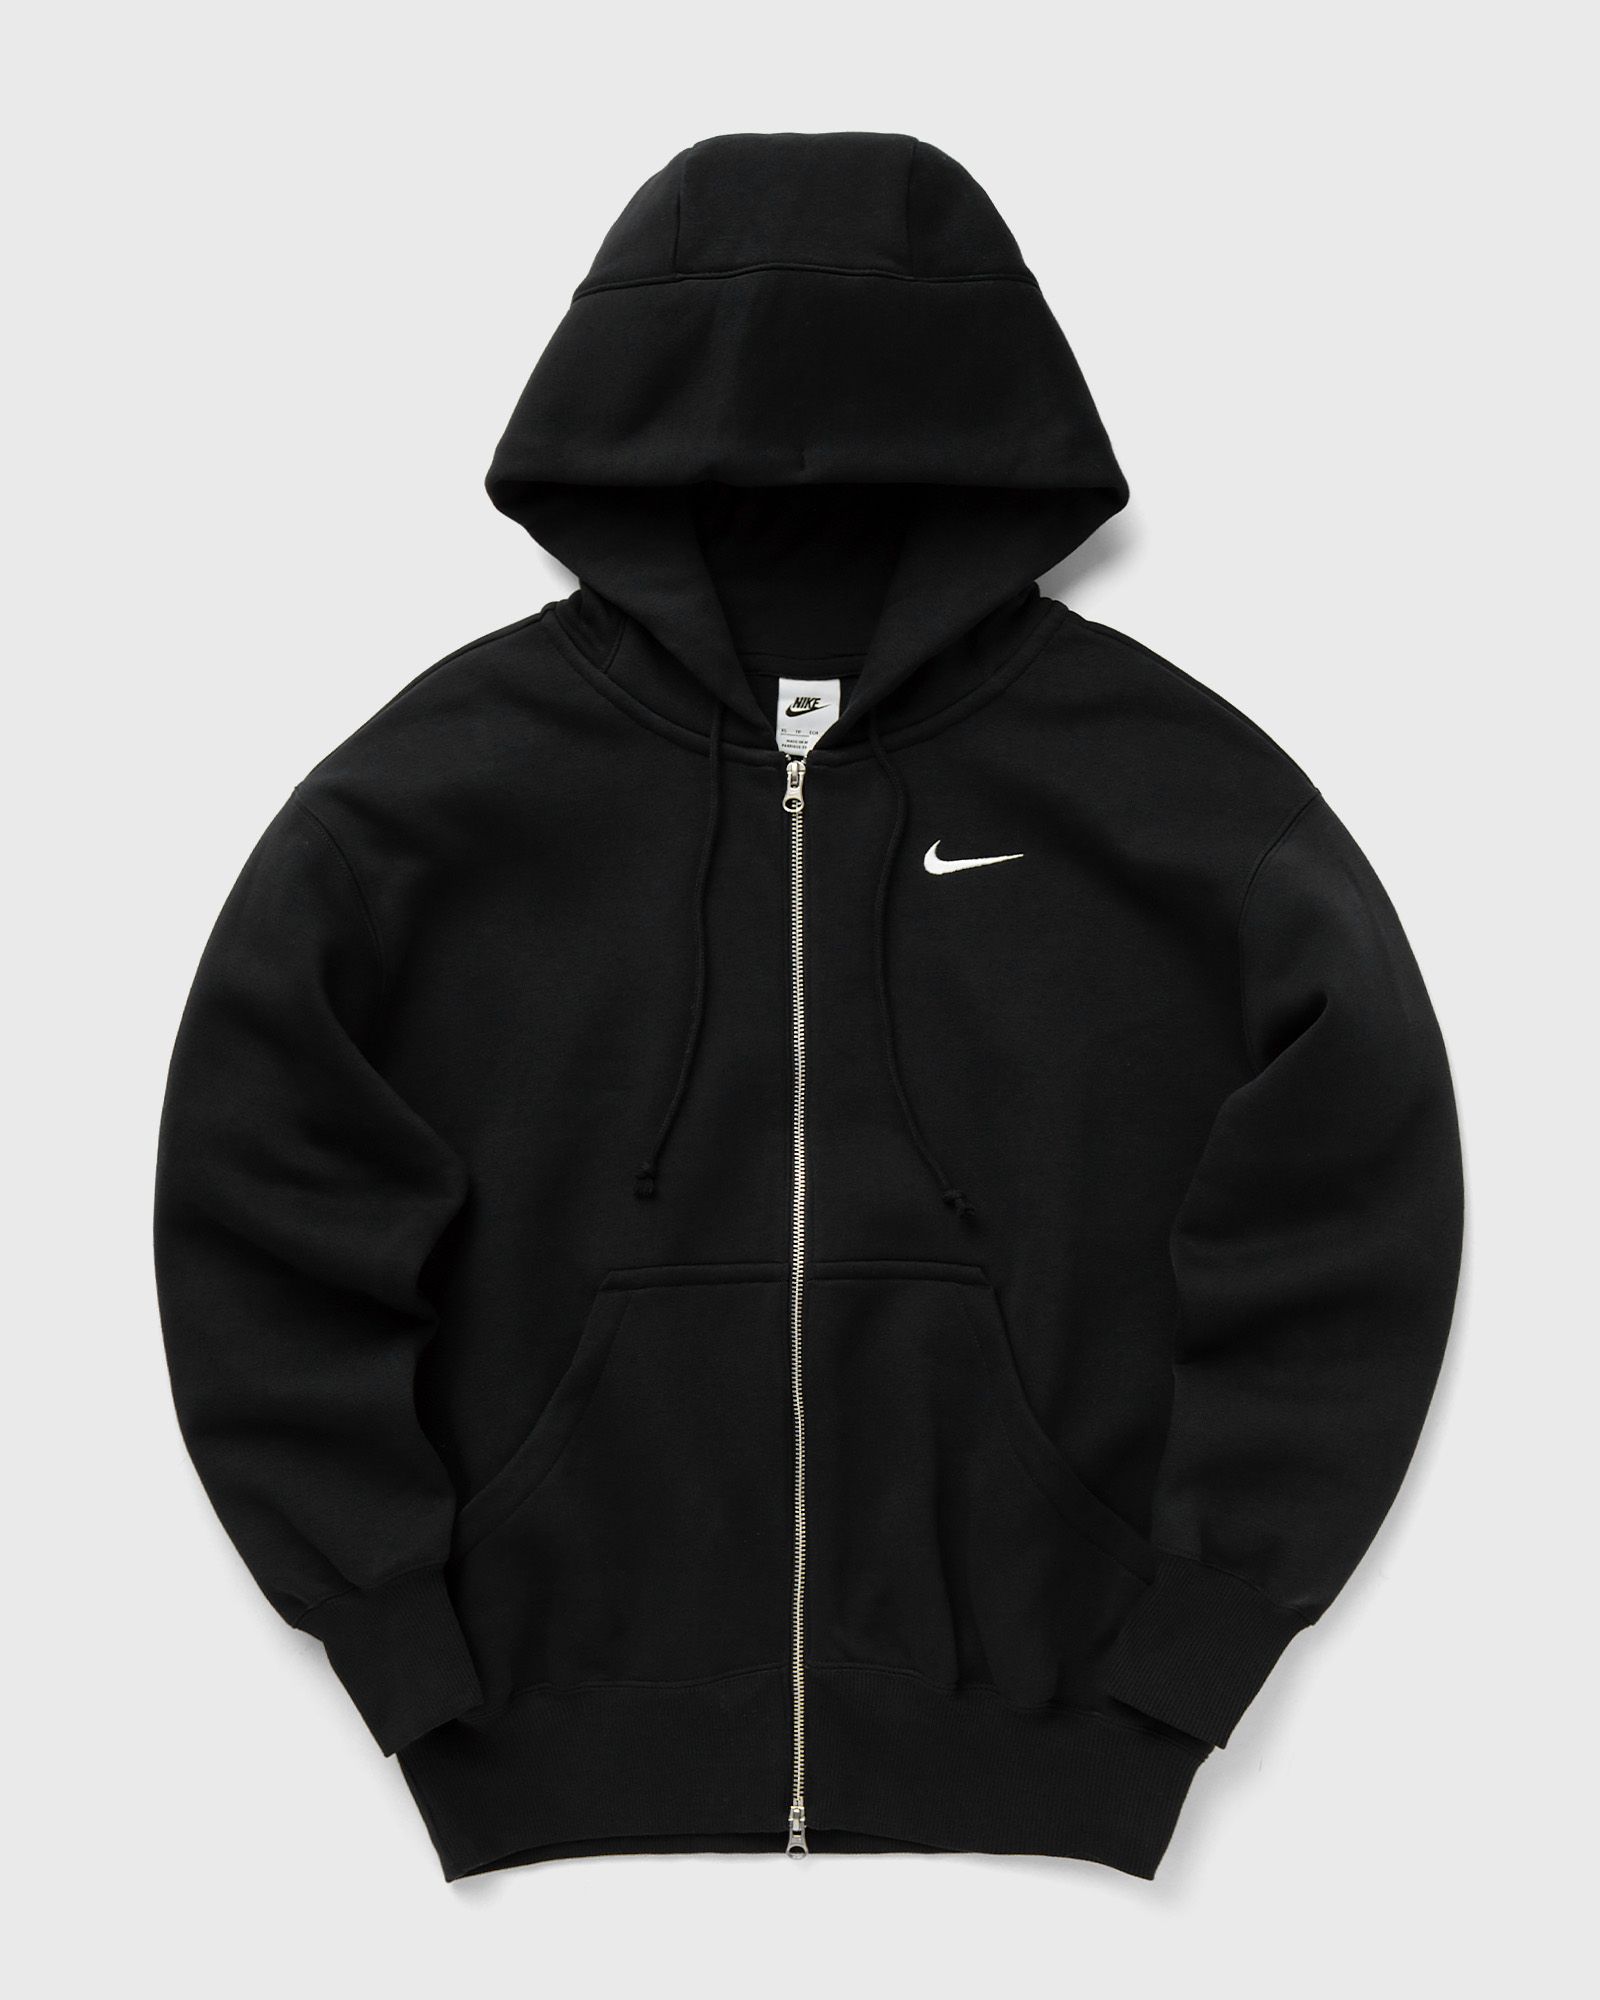 Nike - wmns phoenix fleece oversized full-zip hoodie women hoodies|zippers black in größe:l